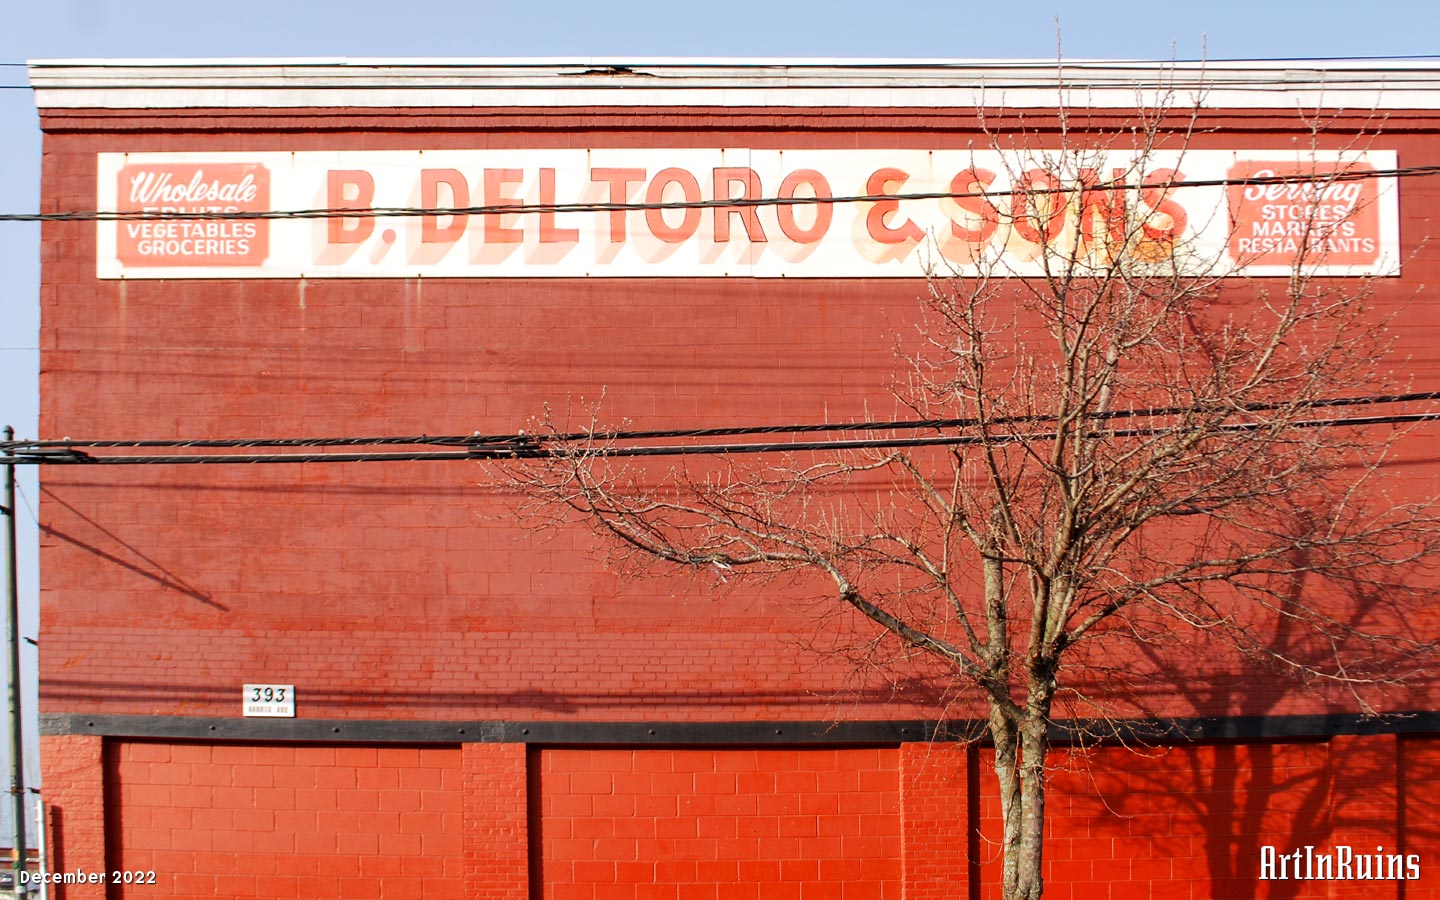 B. Deltoro & Sons, 393 Harris Ave.